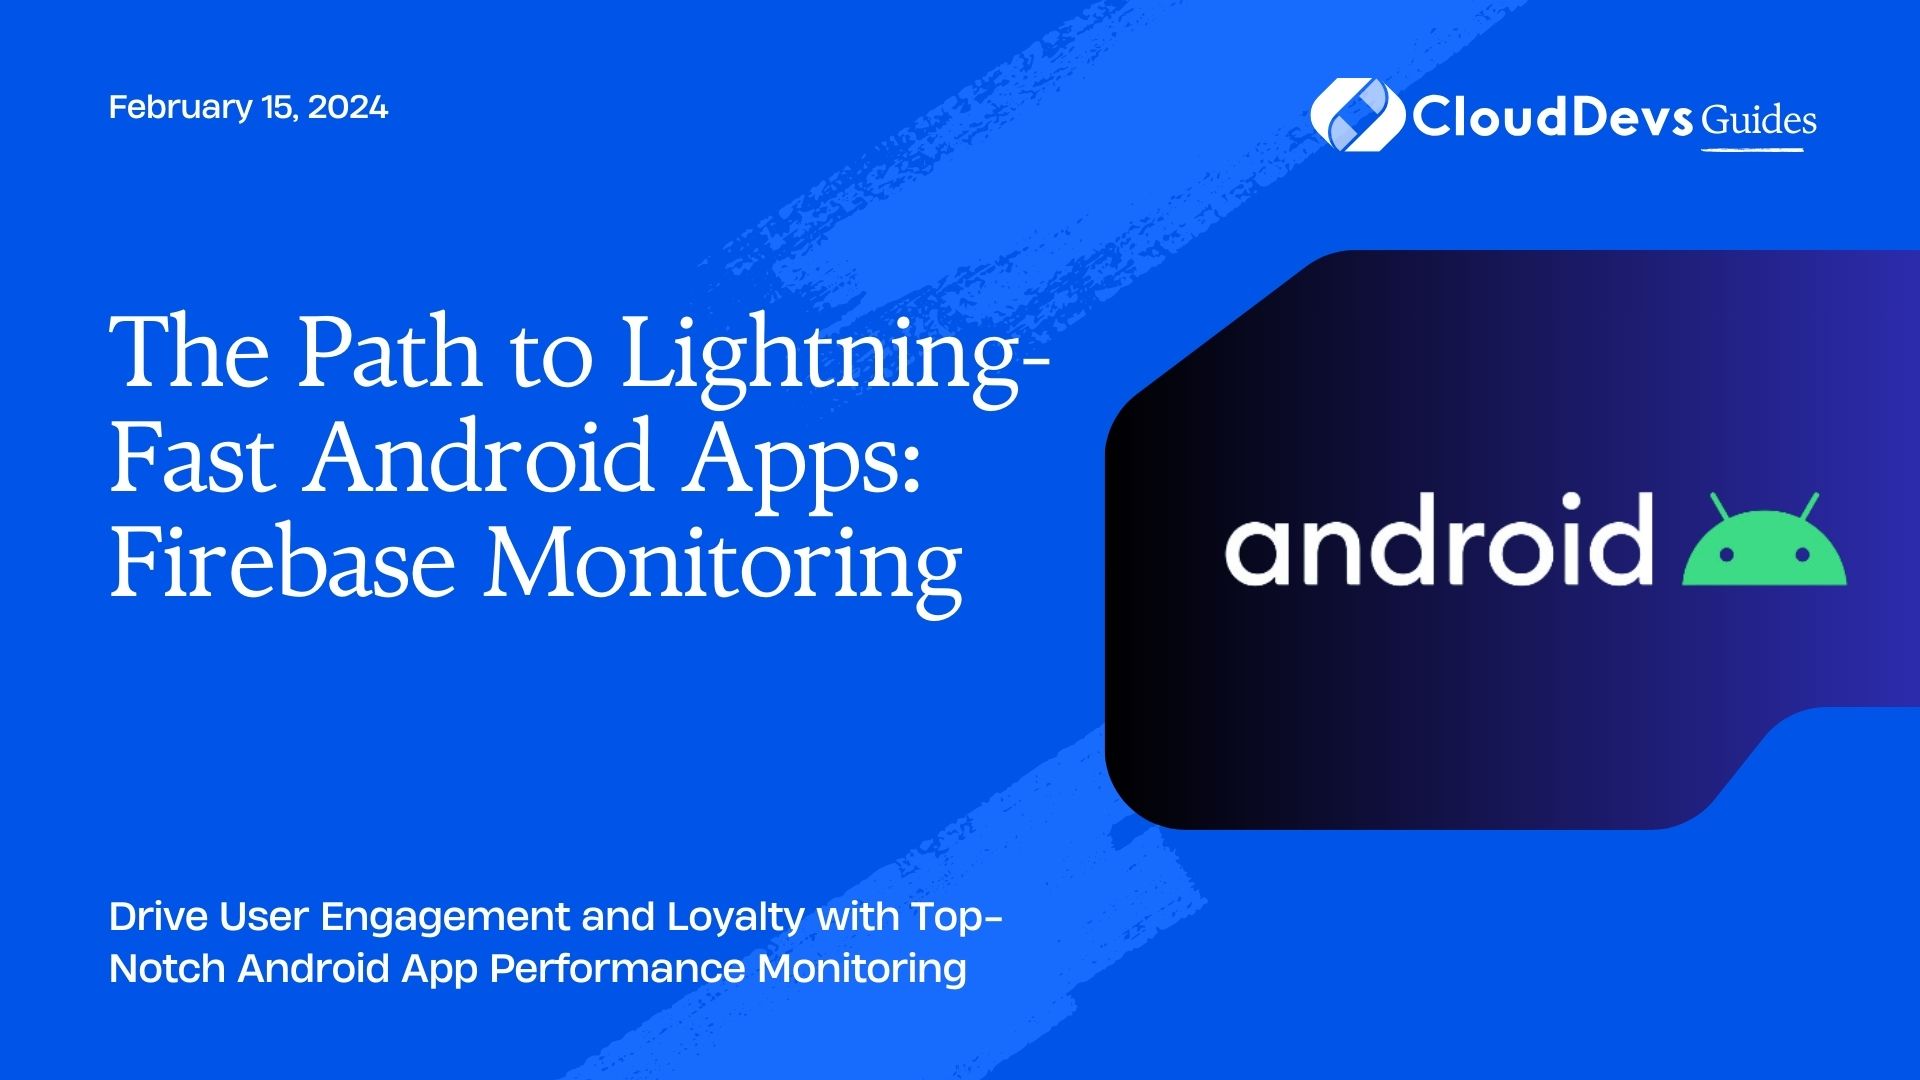 Android App Performance Monitoring: Utilizing Firebase Performance